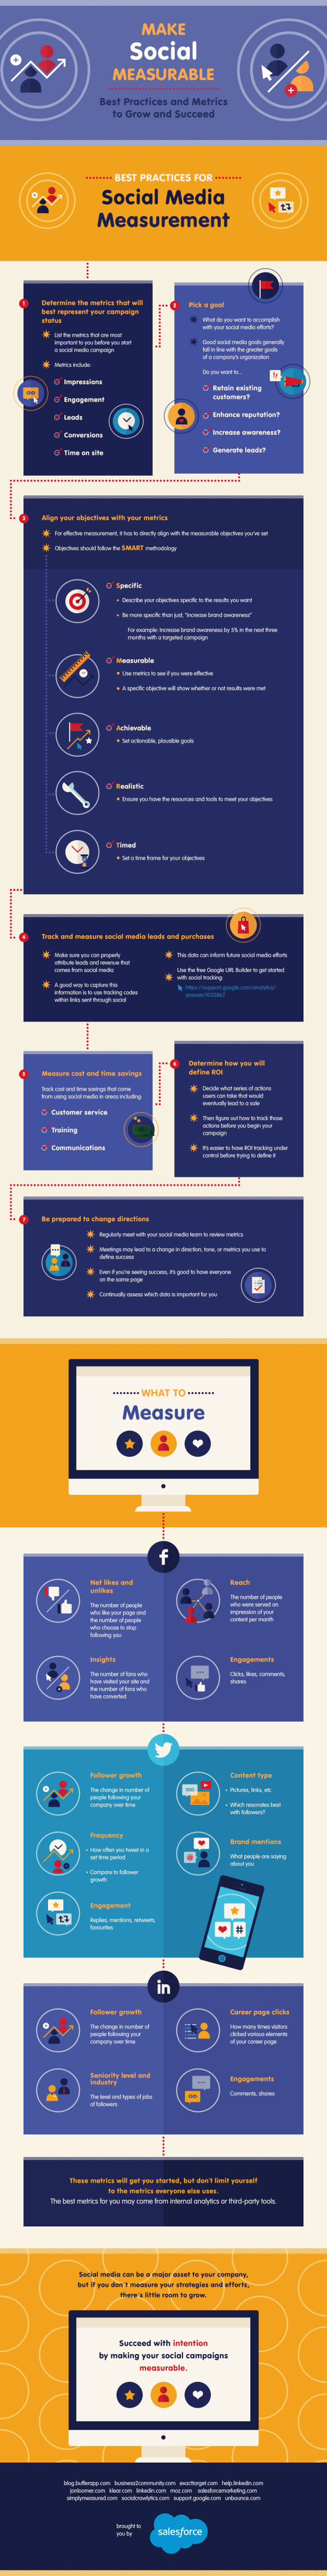 How to Measure Social Media Success